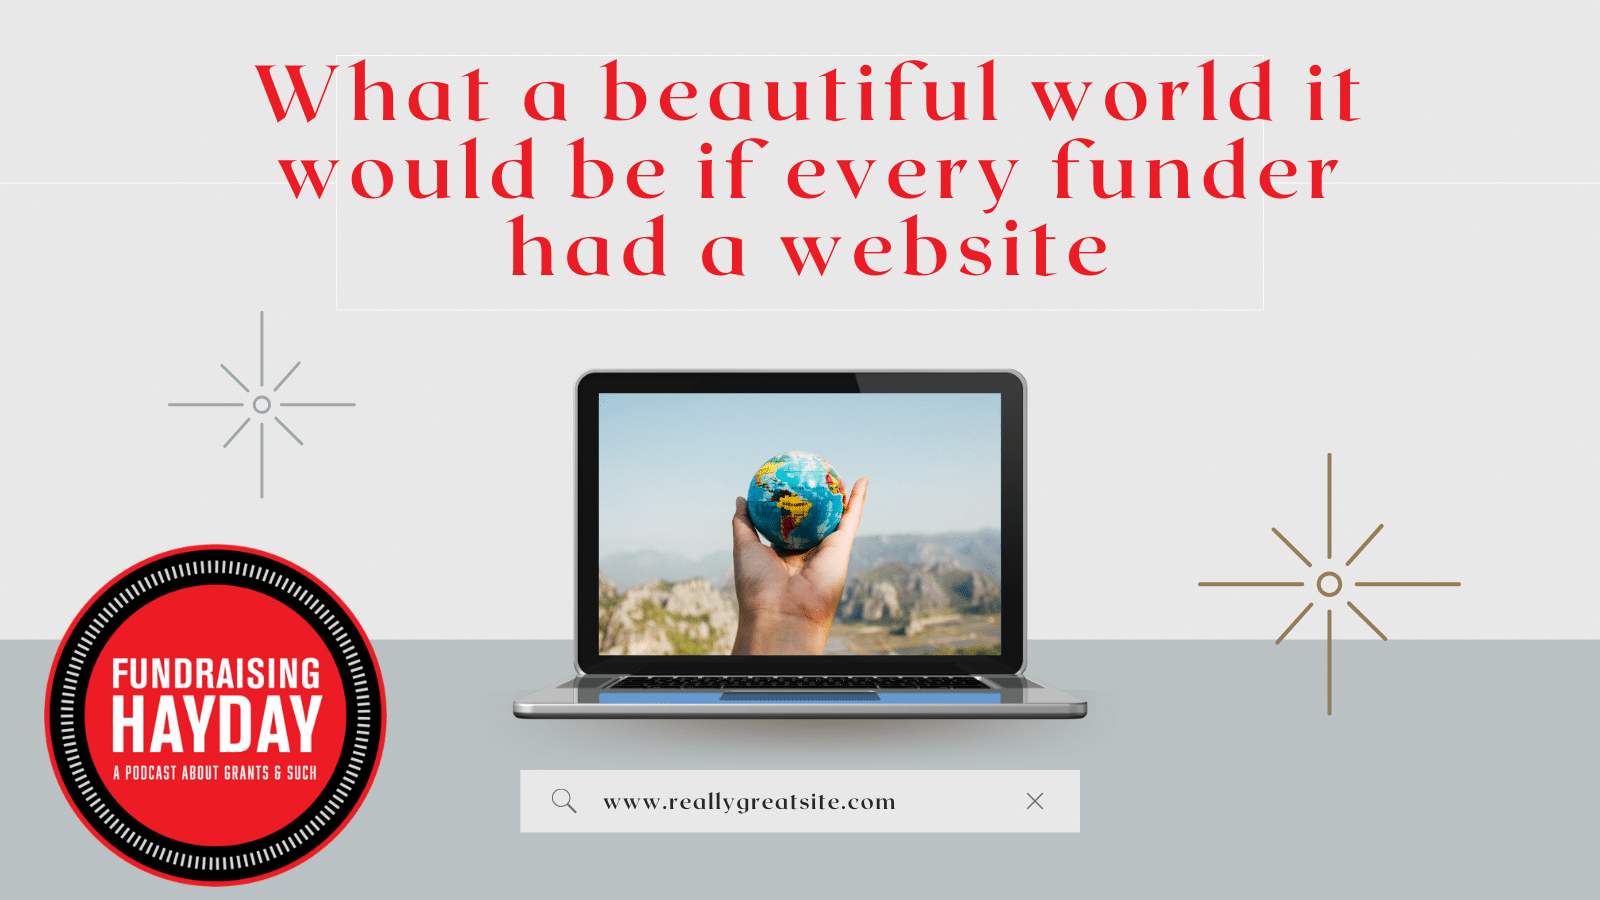 Websites: Every Funder Needs One